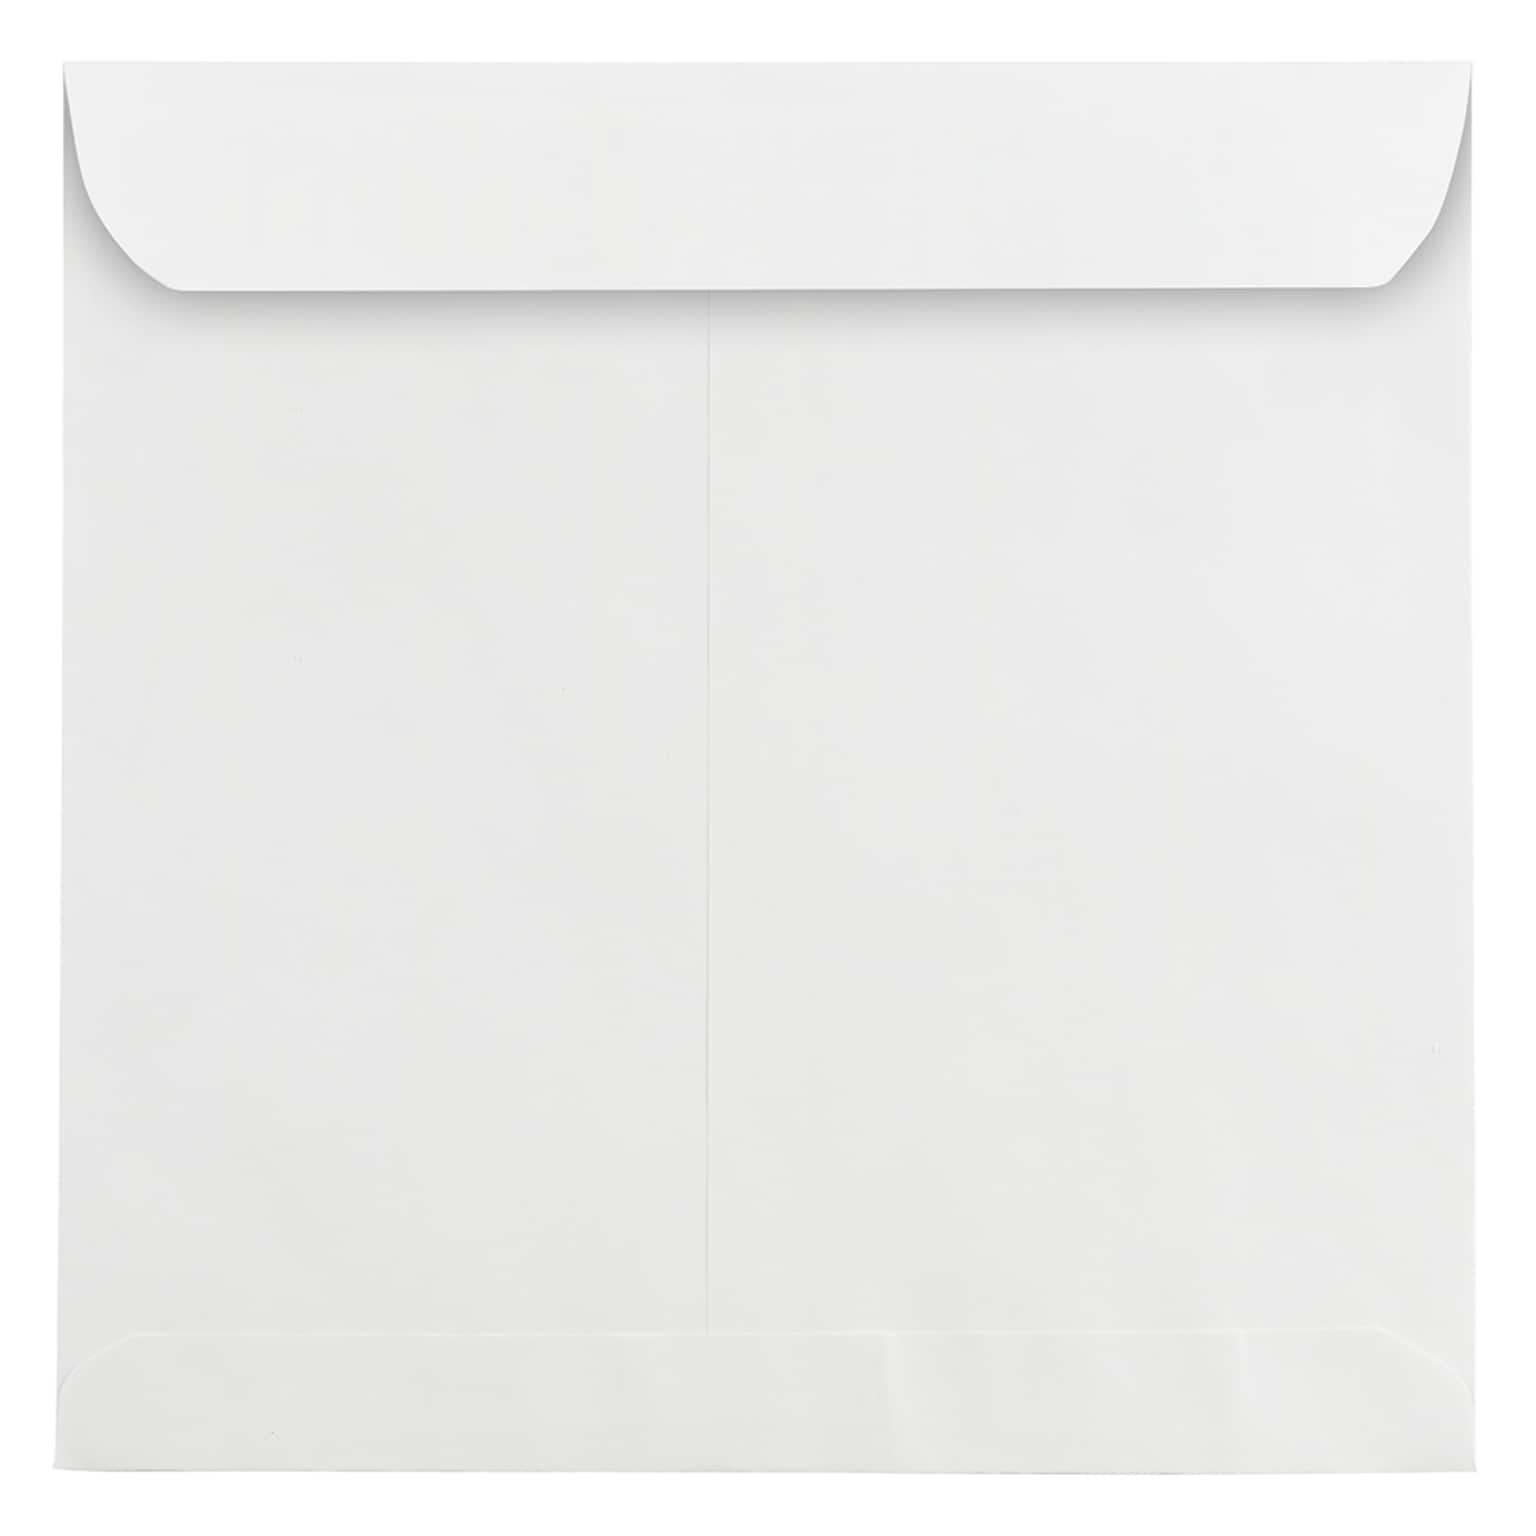 JAM Paper 13 1/2 Square Invitation Envelope, 13 1/2 x 13 1/2, White, 100/Box (03992323B)